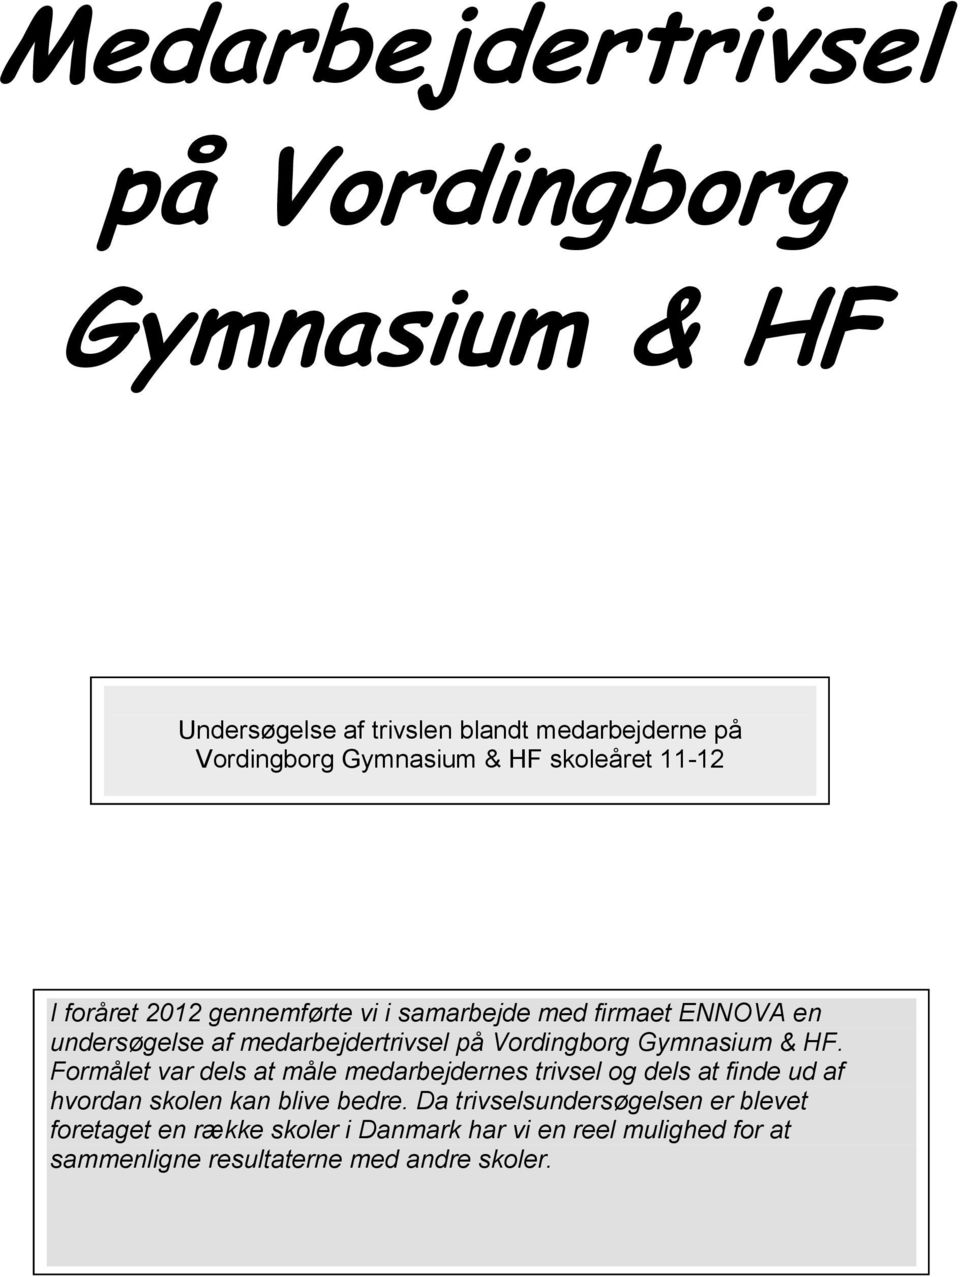 Vordingborg Gymnasium & HF.